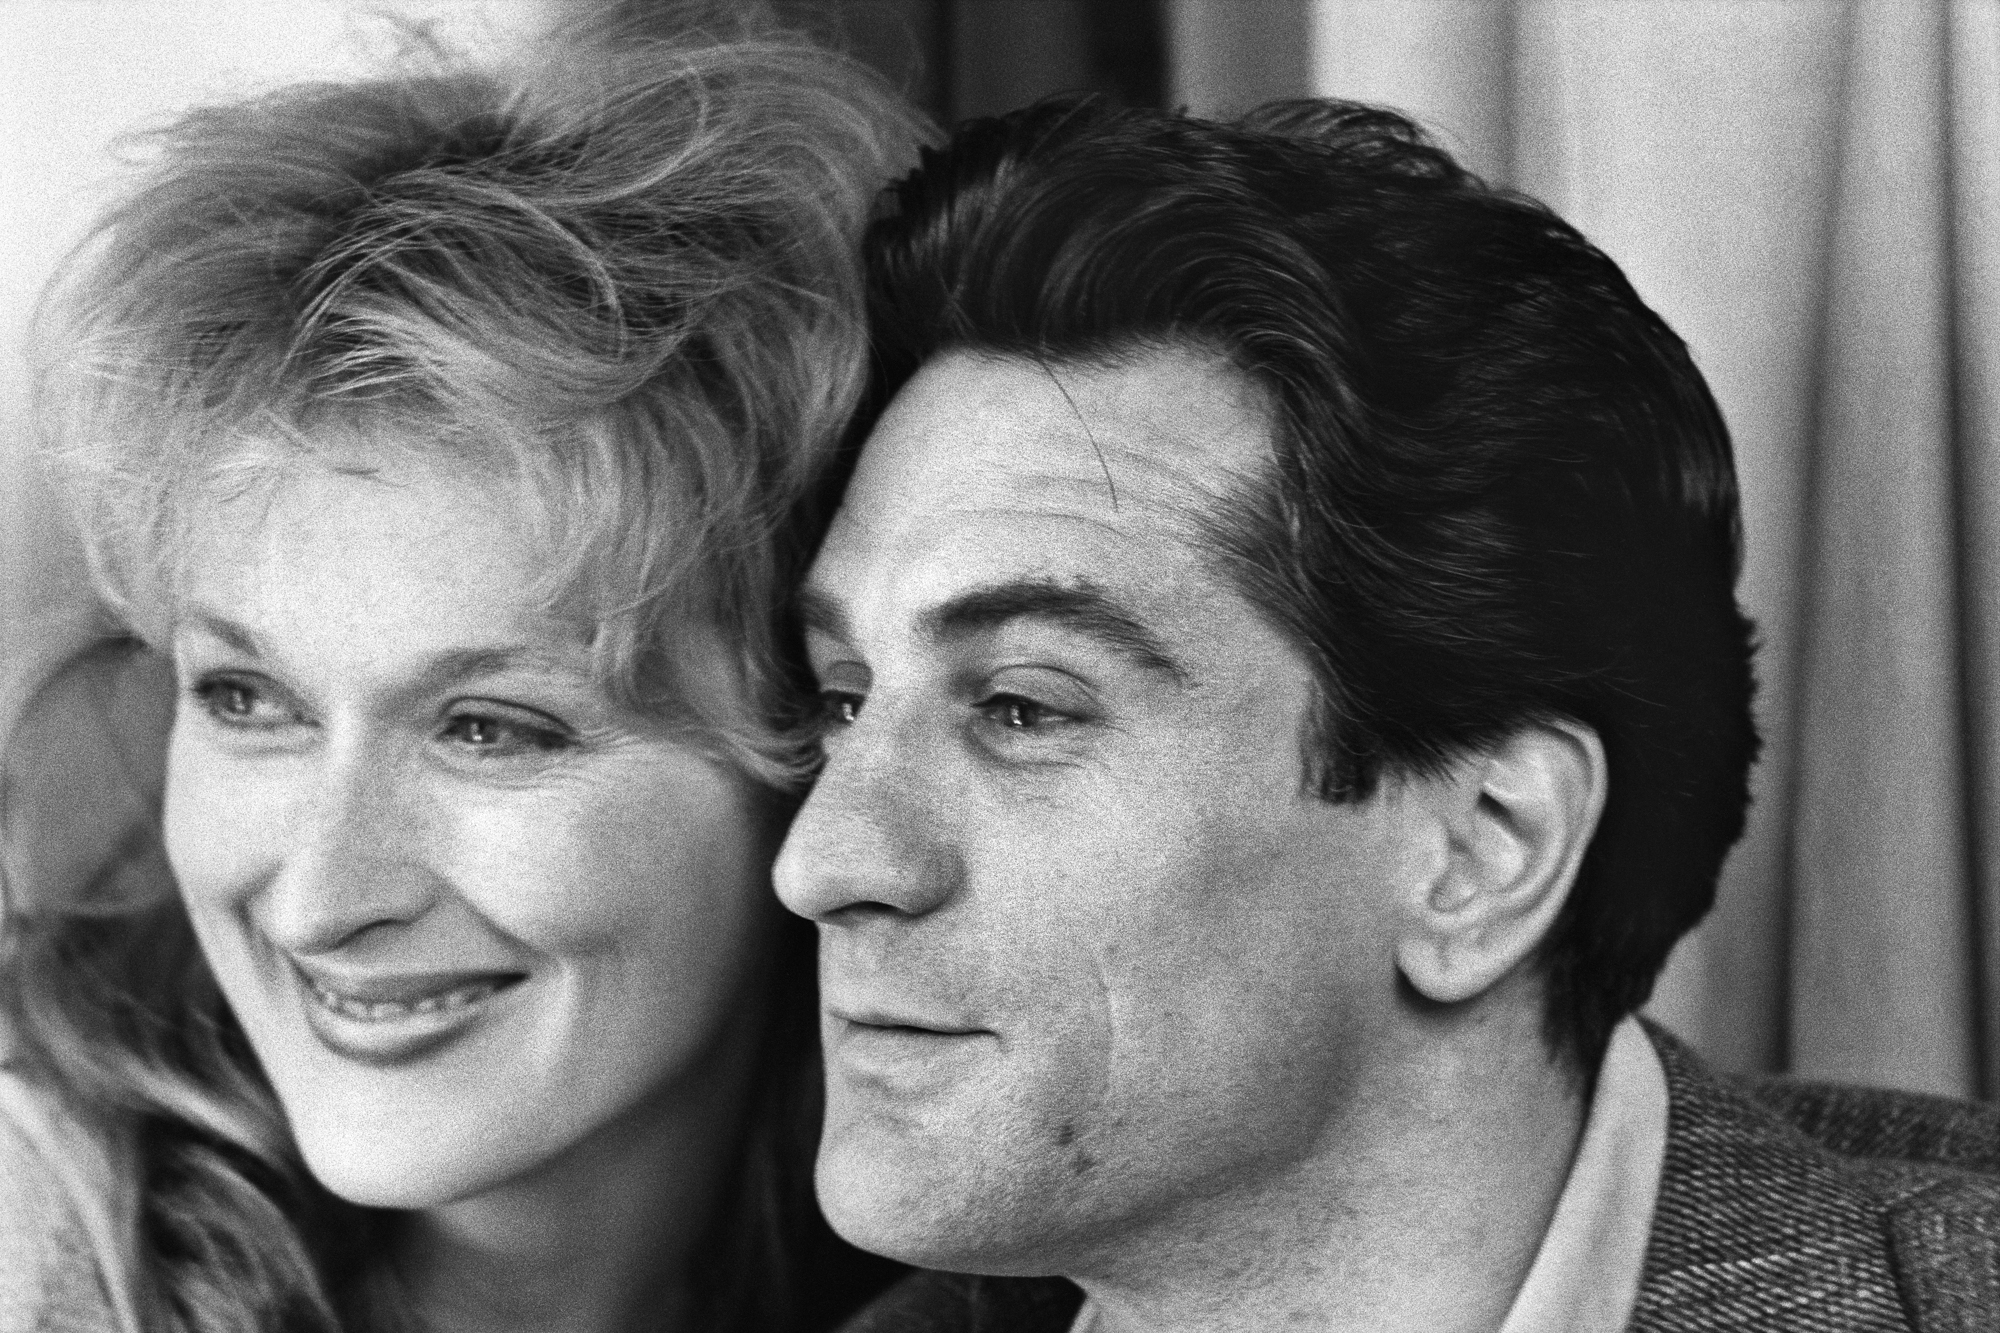 Meryl Streep and Robert De Niro, "Falling in Love", New York, NY, 1984